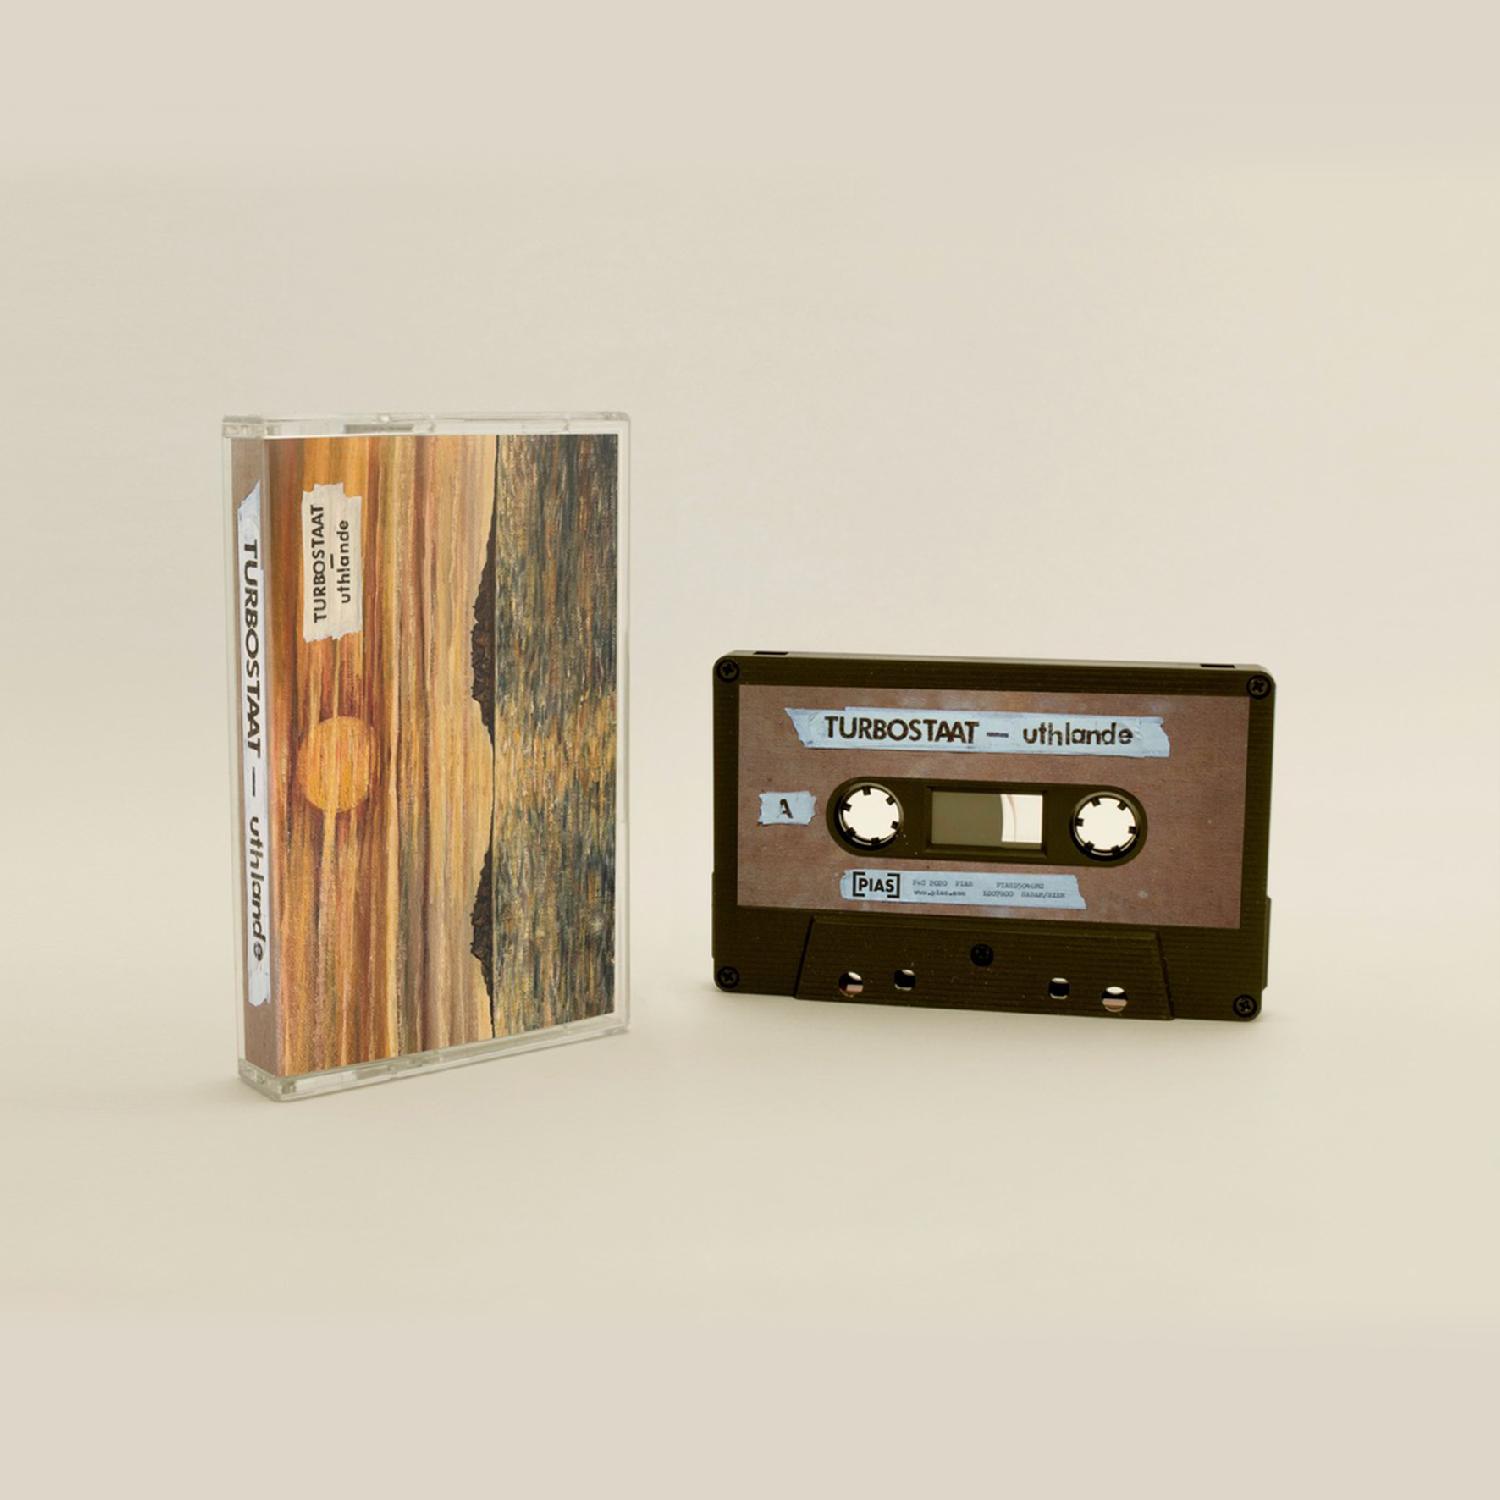 Turbostaat Uthlande MC audio cassette